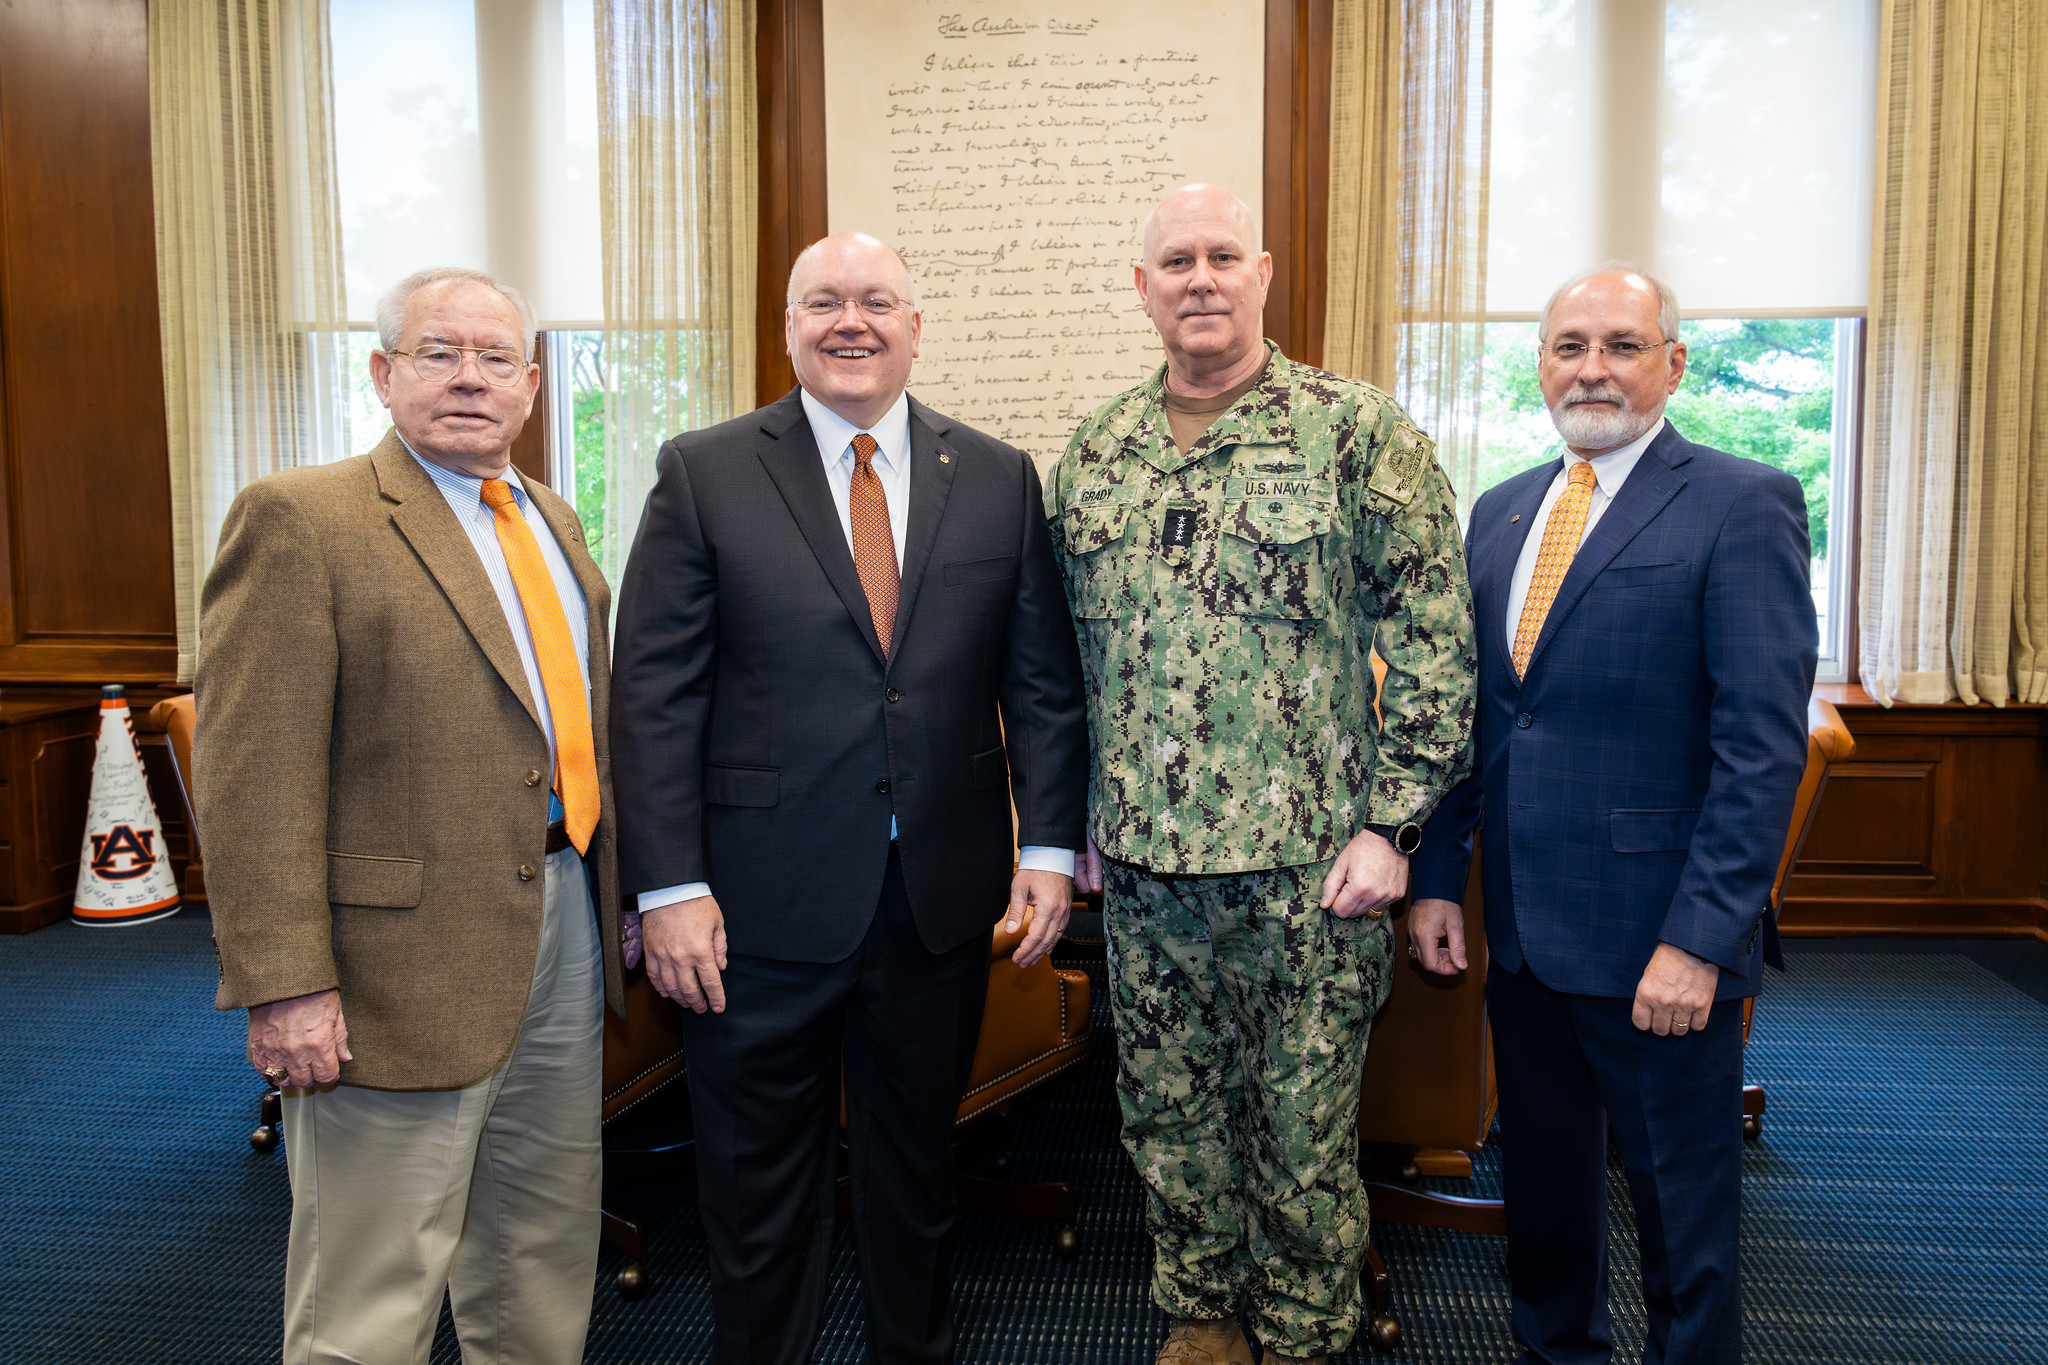 Lt. Gen. (retired) Ron Burgess, Christopher B. Roberts, Adm. Christopher W. Grady, and Steven Taylor